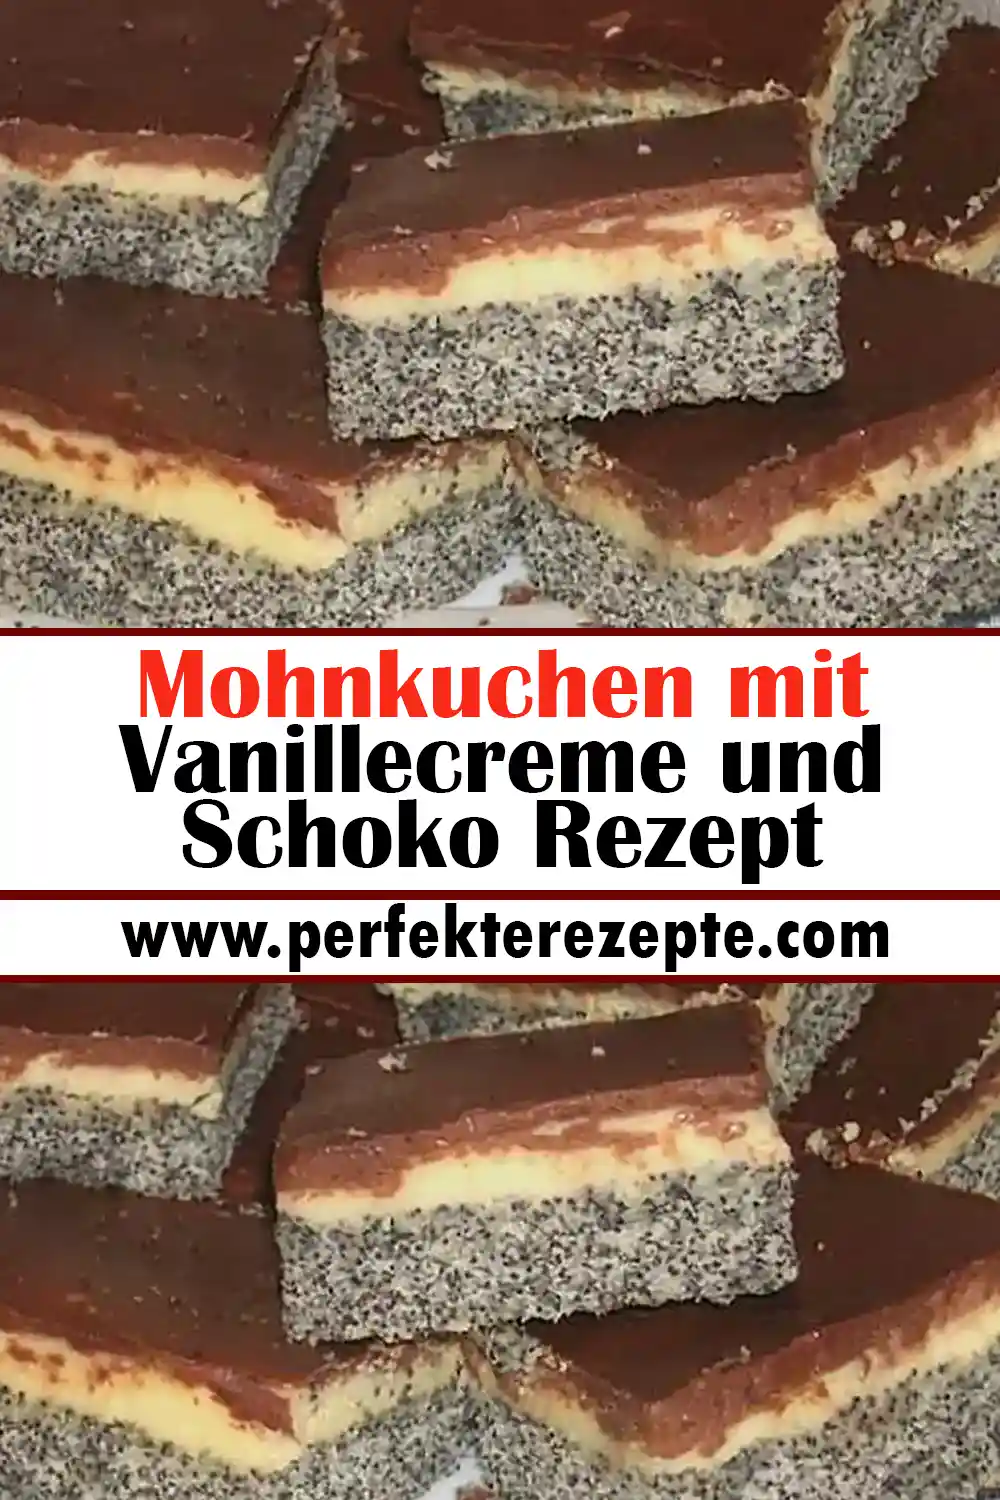 Mohnkuchen mit Vanillecreme und Schoko Rezept (leckerer Blechkuchen, schmeckt lecker, gelingt immer)